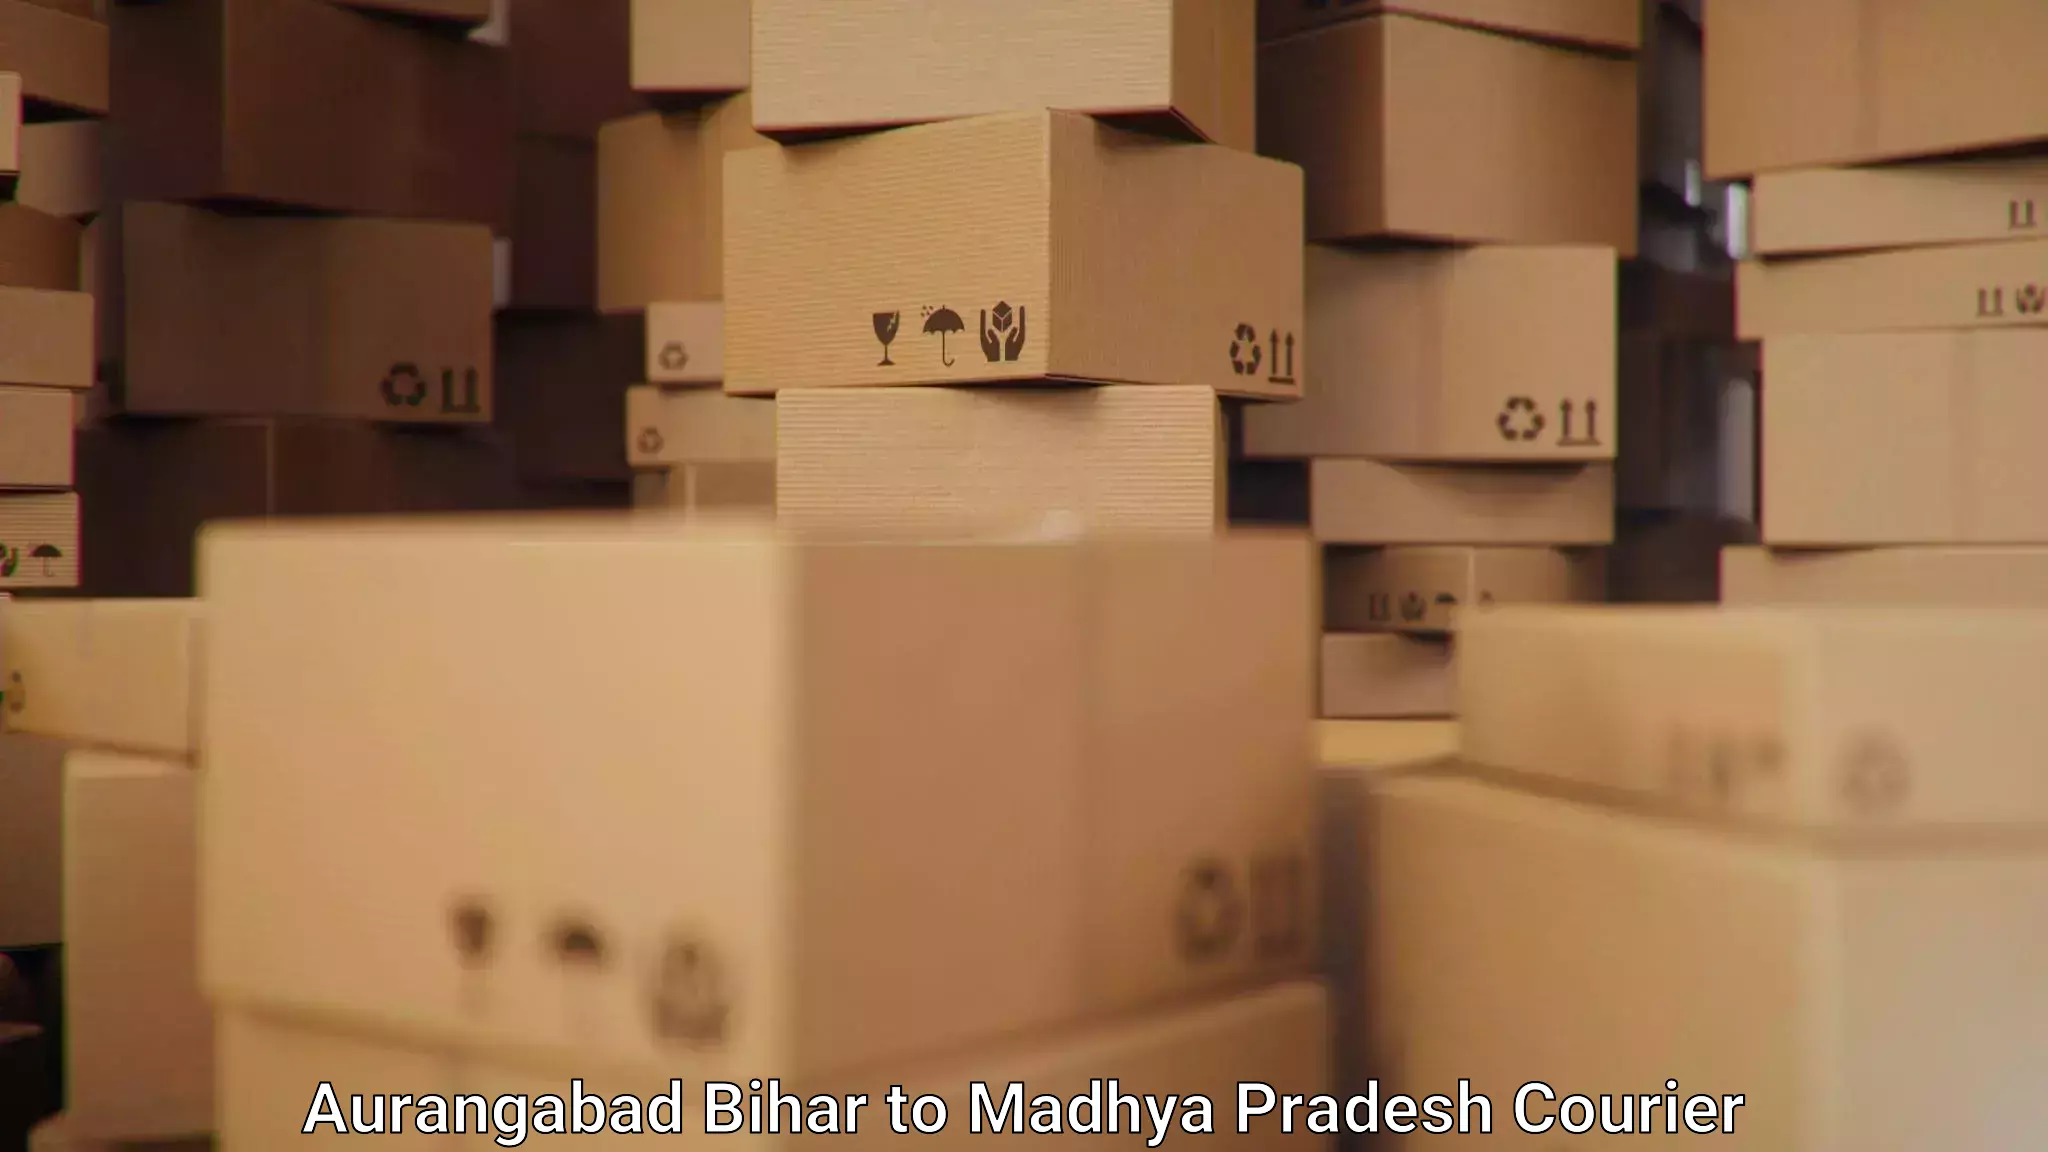 Special handling courier Aurangabad Bihar to Madhya Pradesh